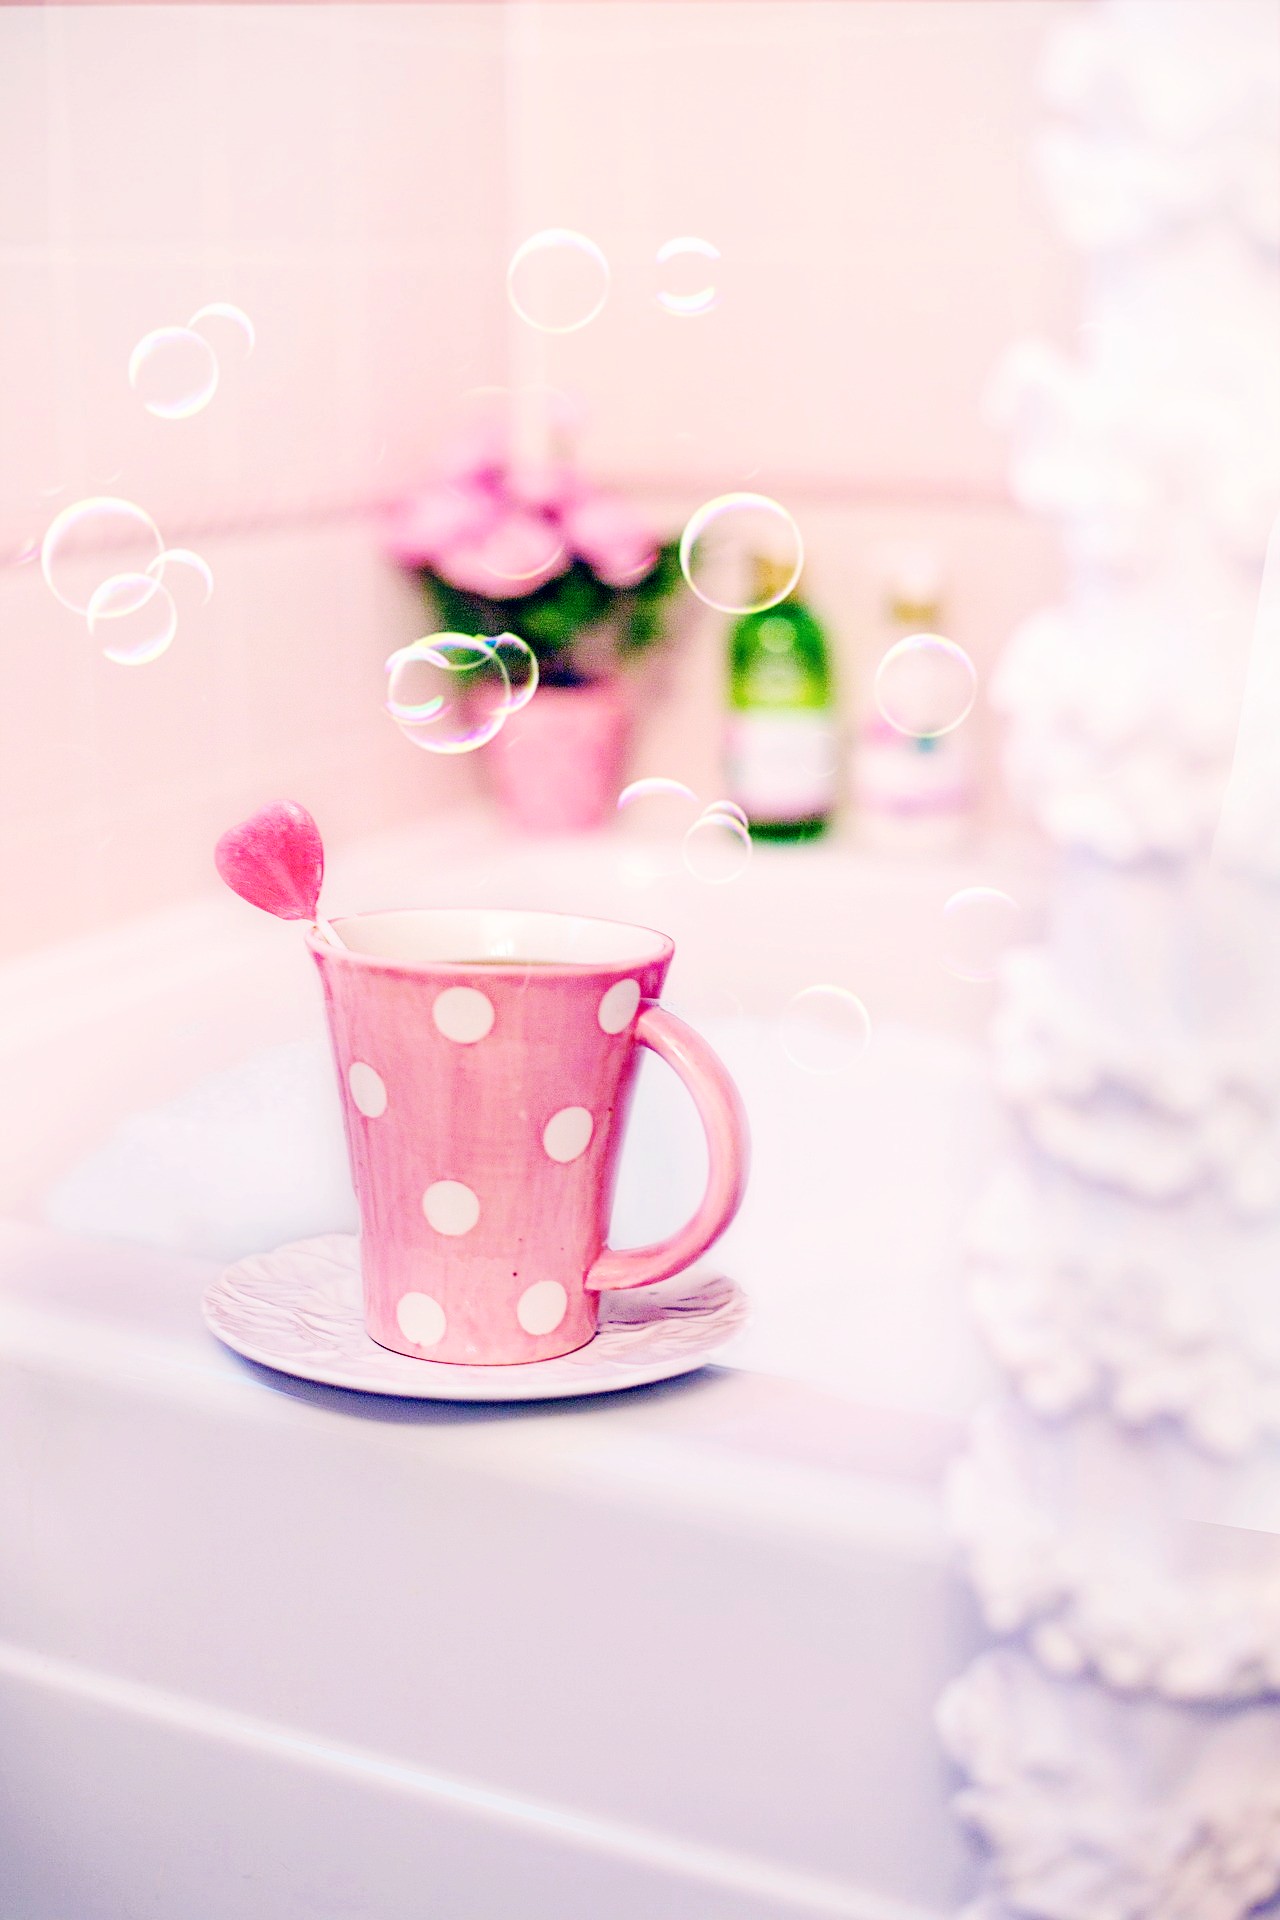 <img src="pink.jpg" alt="pink bubble bath valentine's day date ideas"/> 